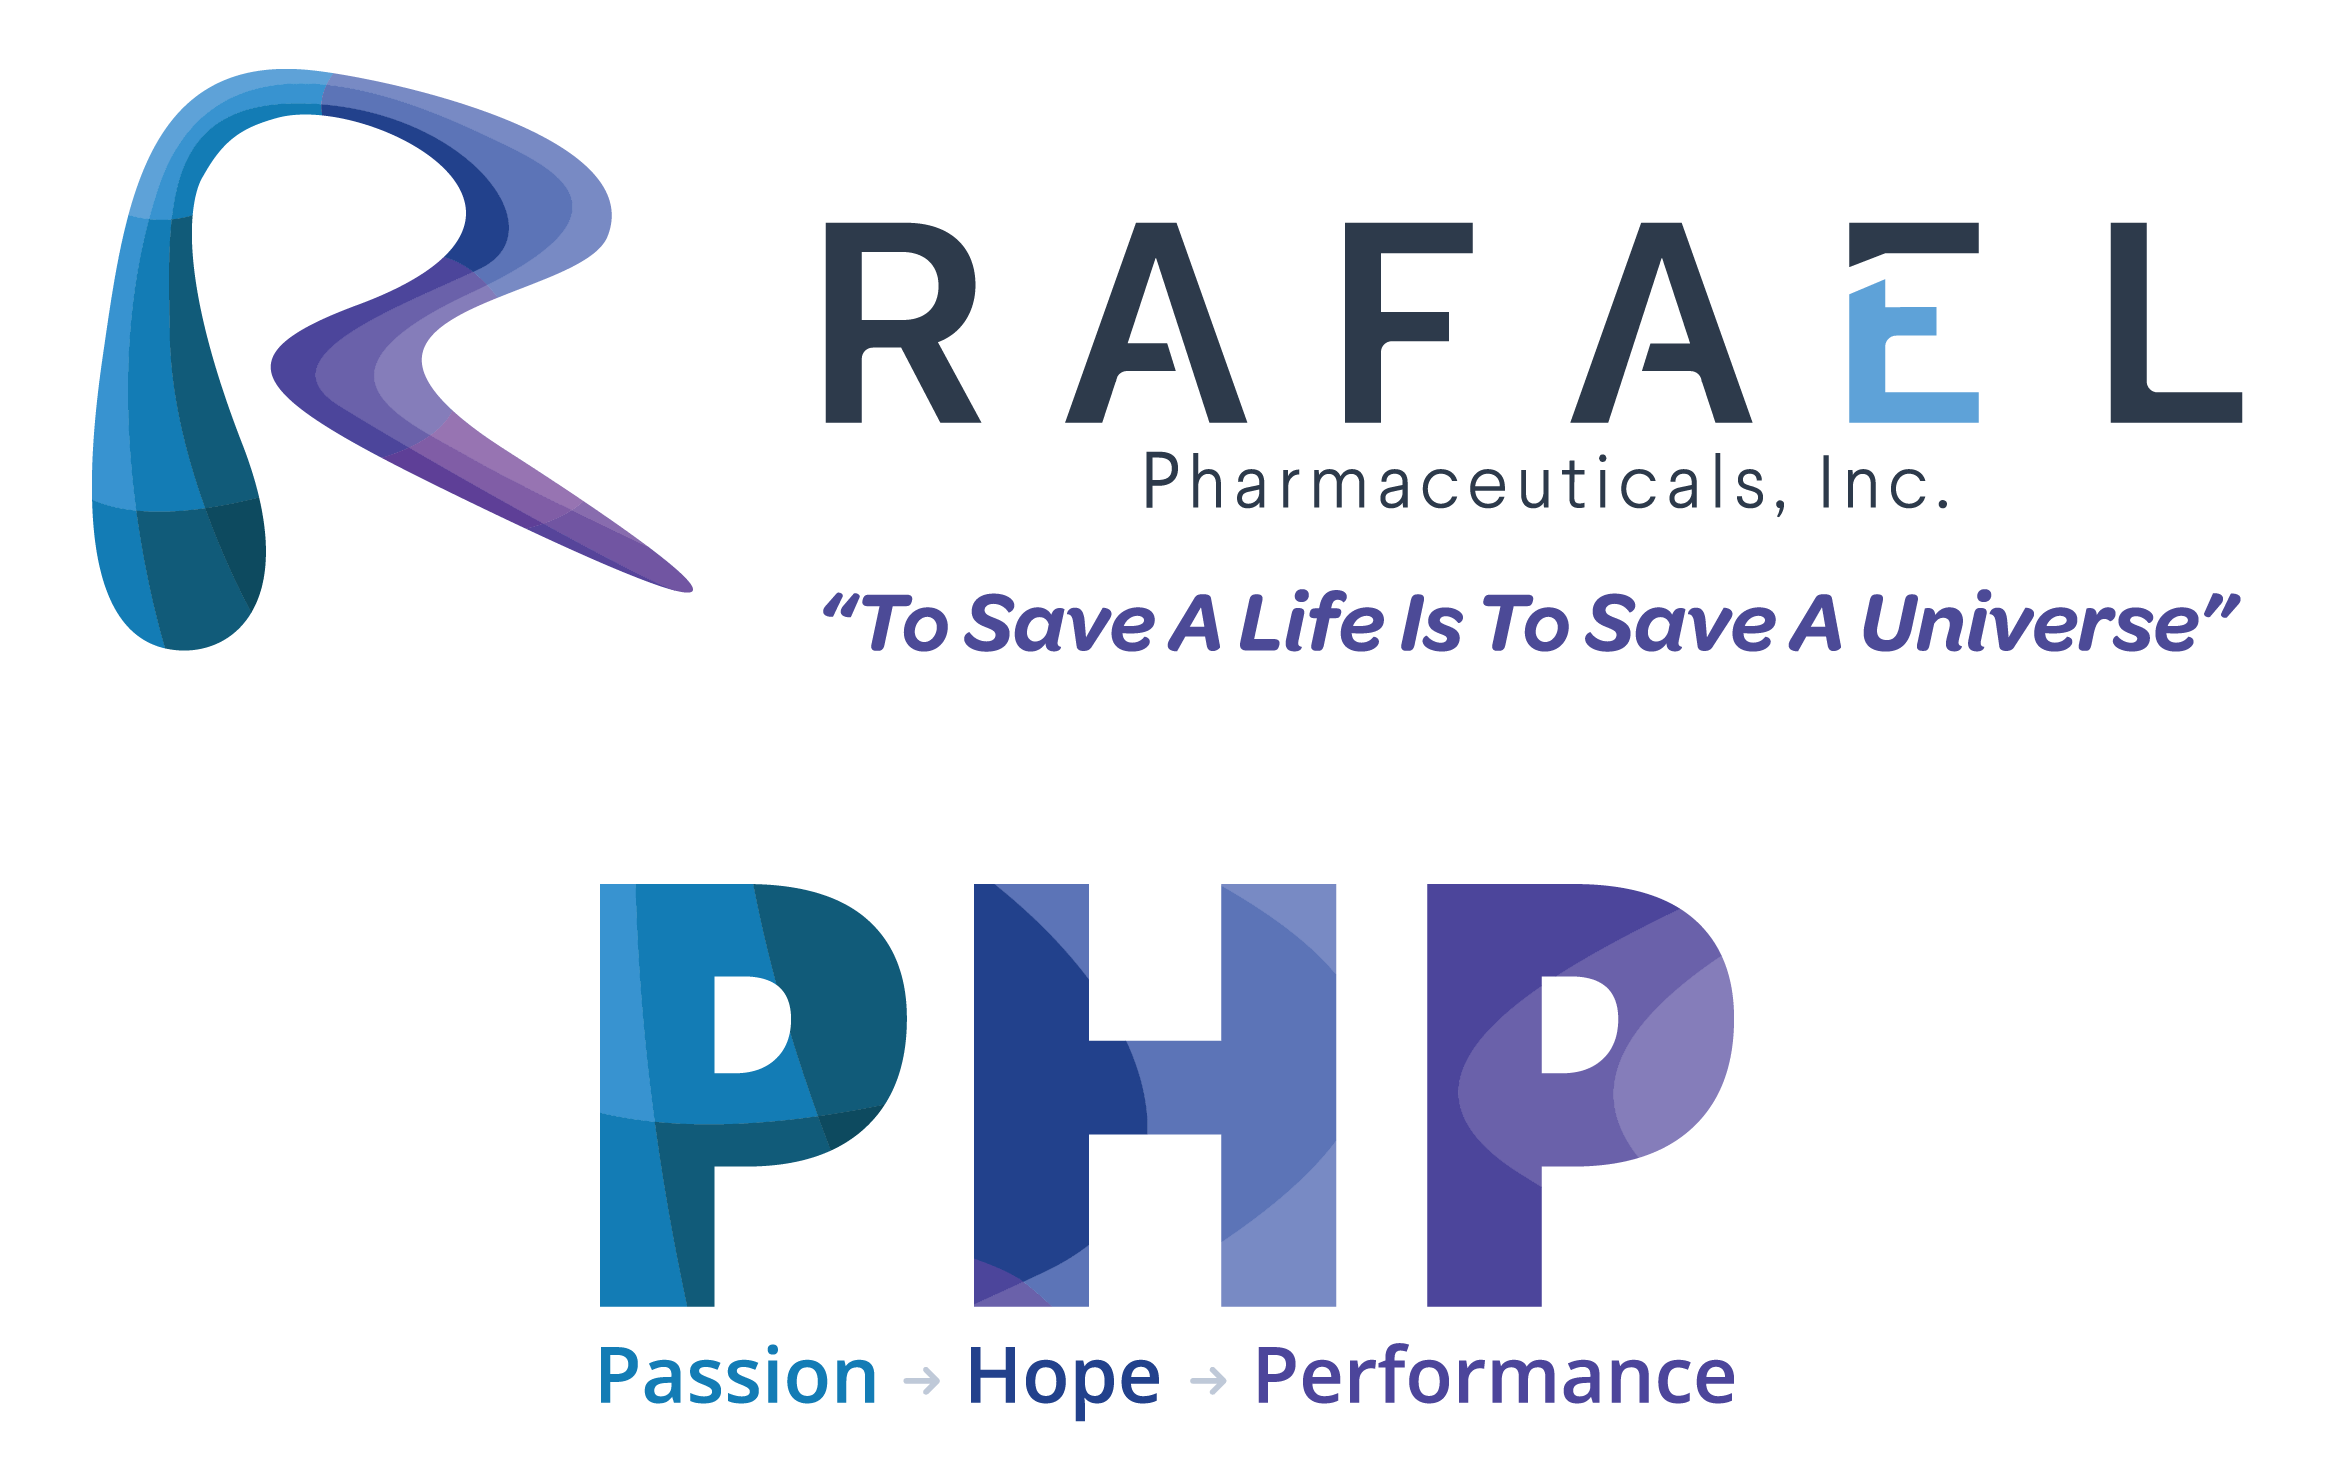 FINAL Rafafel_Pharma_PHP_LOGO_Updated 05042020_V3 (1).png